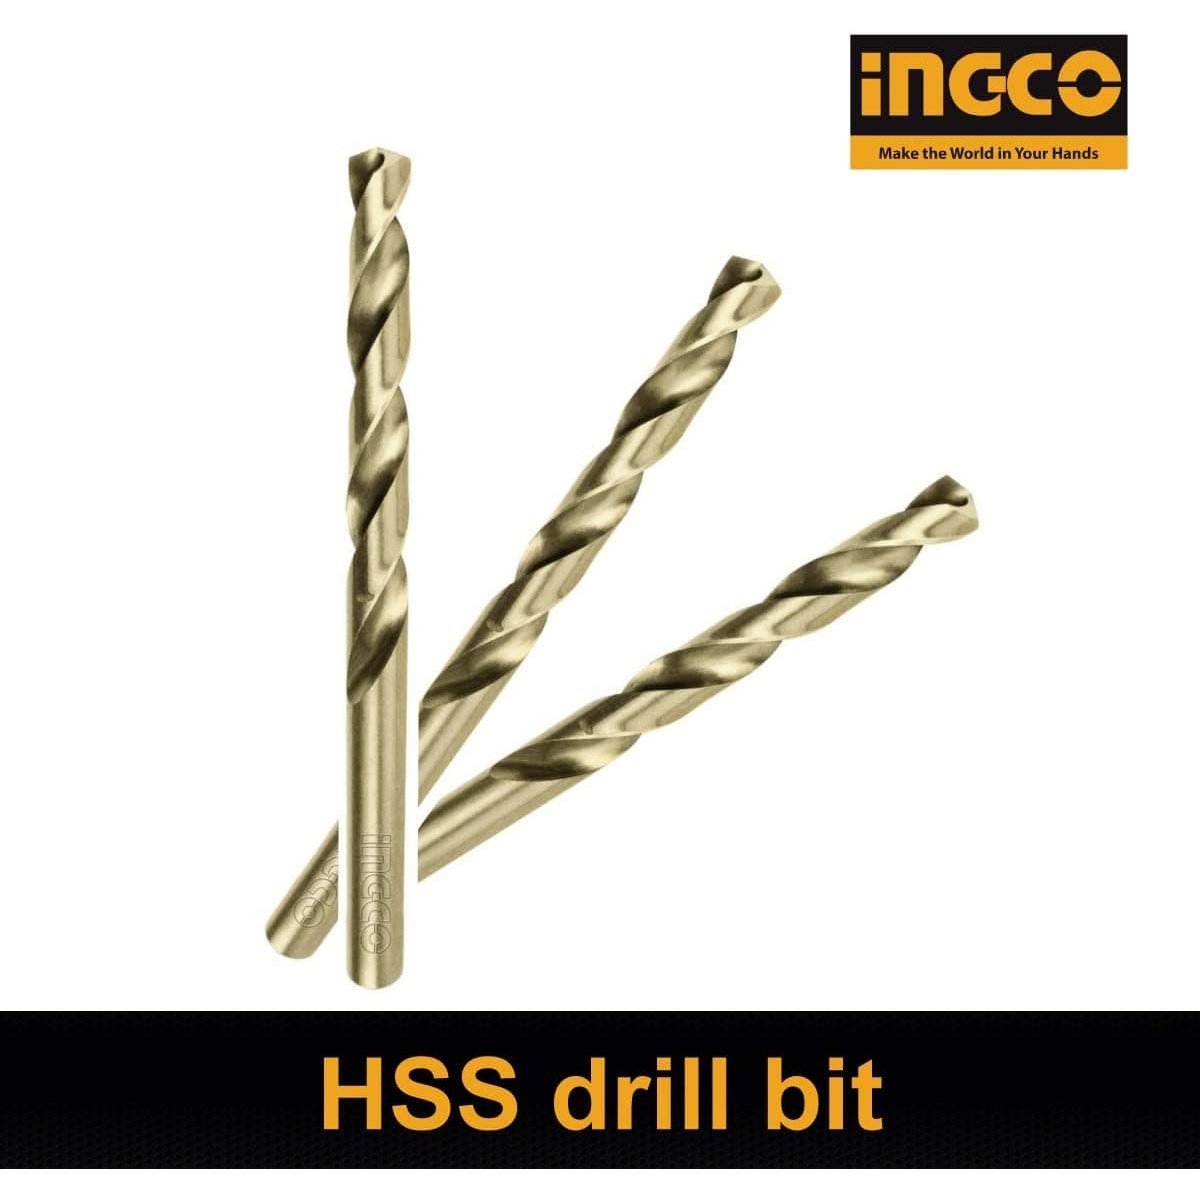 Ingco Metal HSS Drill Bit | Supply Master | Accra, Ghana Tools Building Steel Engineering Hardware tool